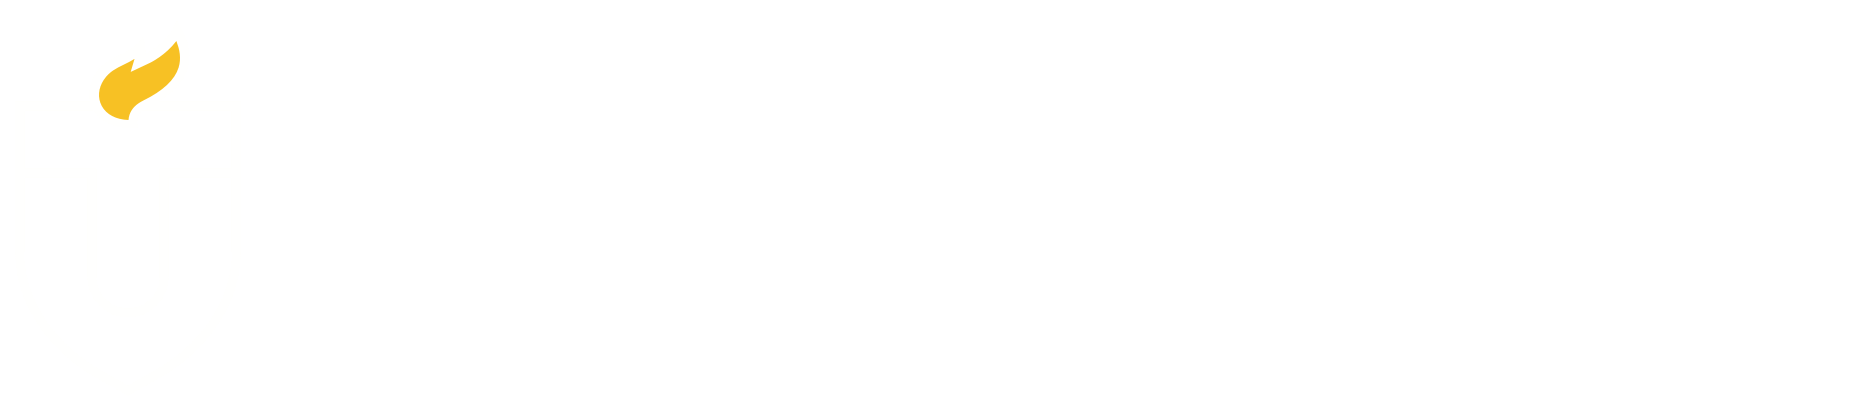 lander divisions of touro university